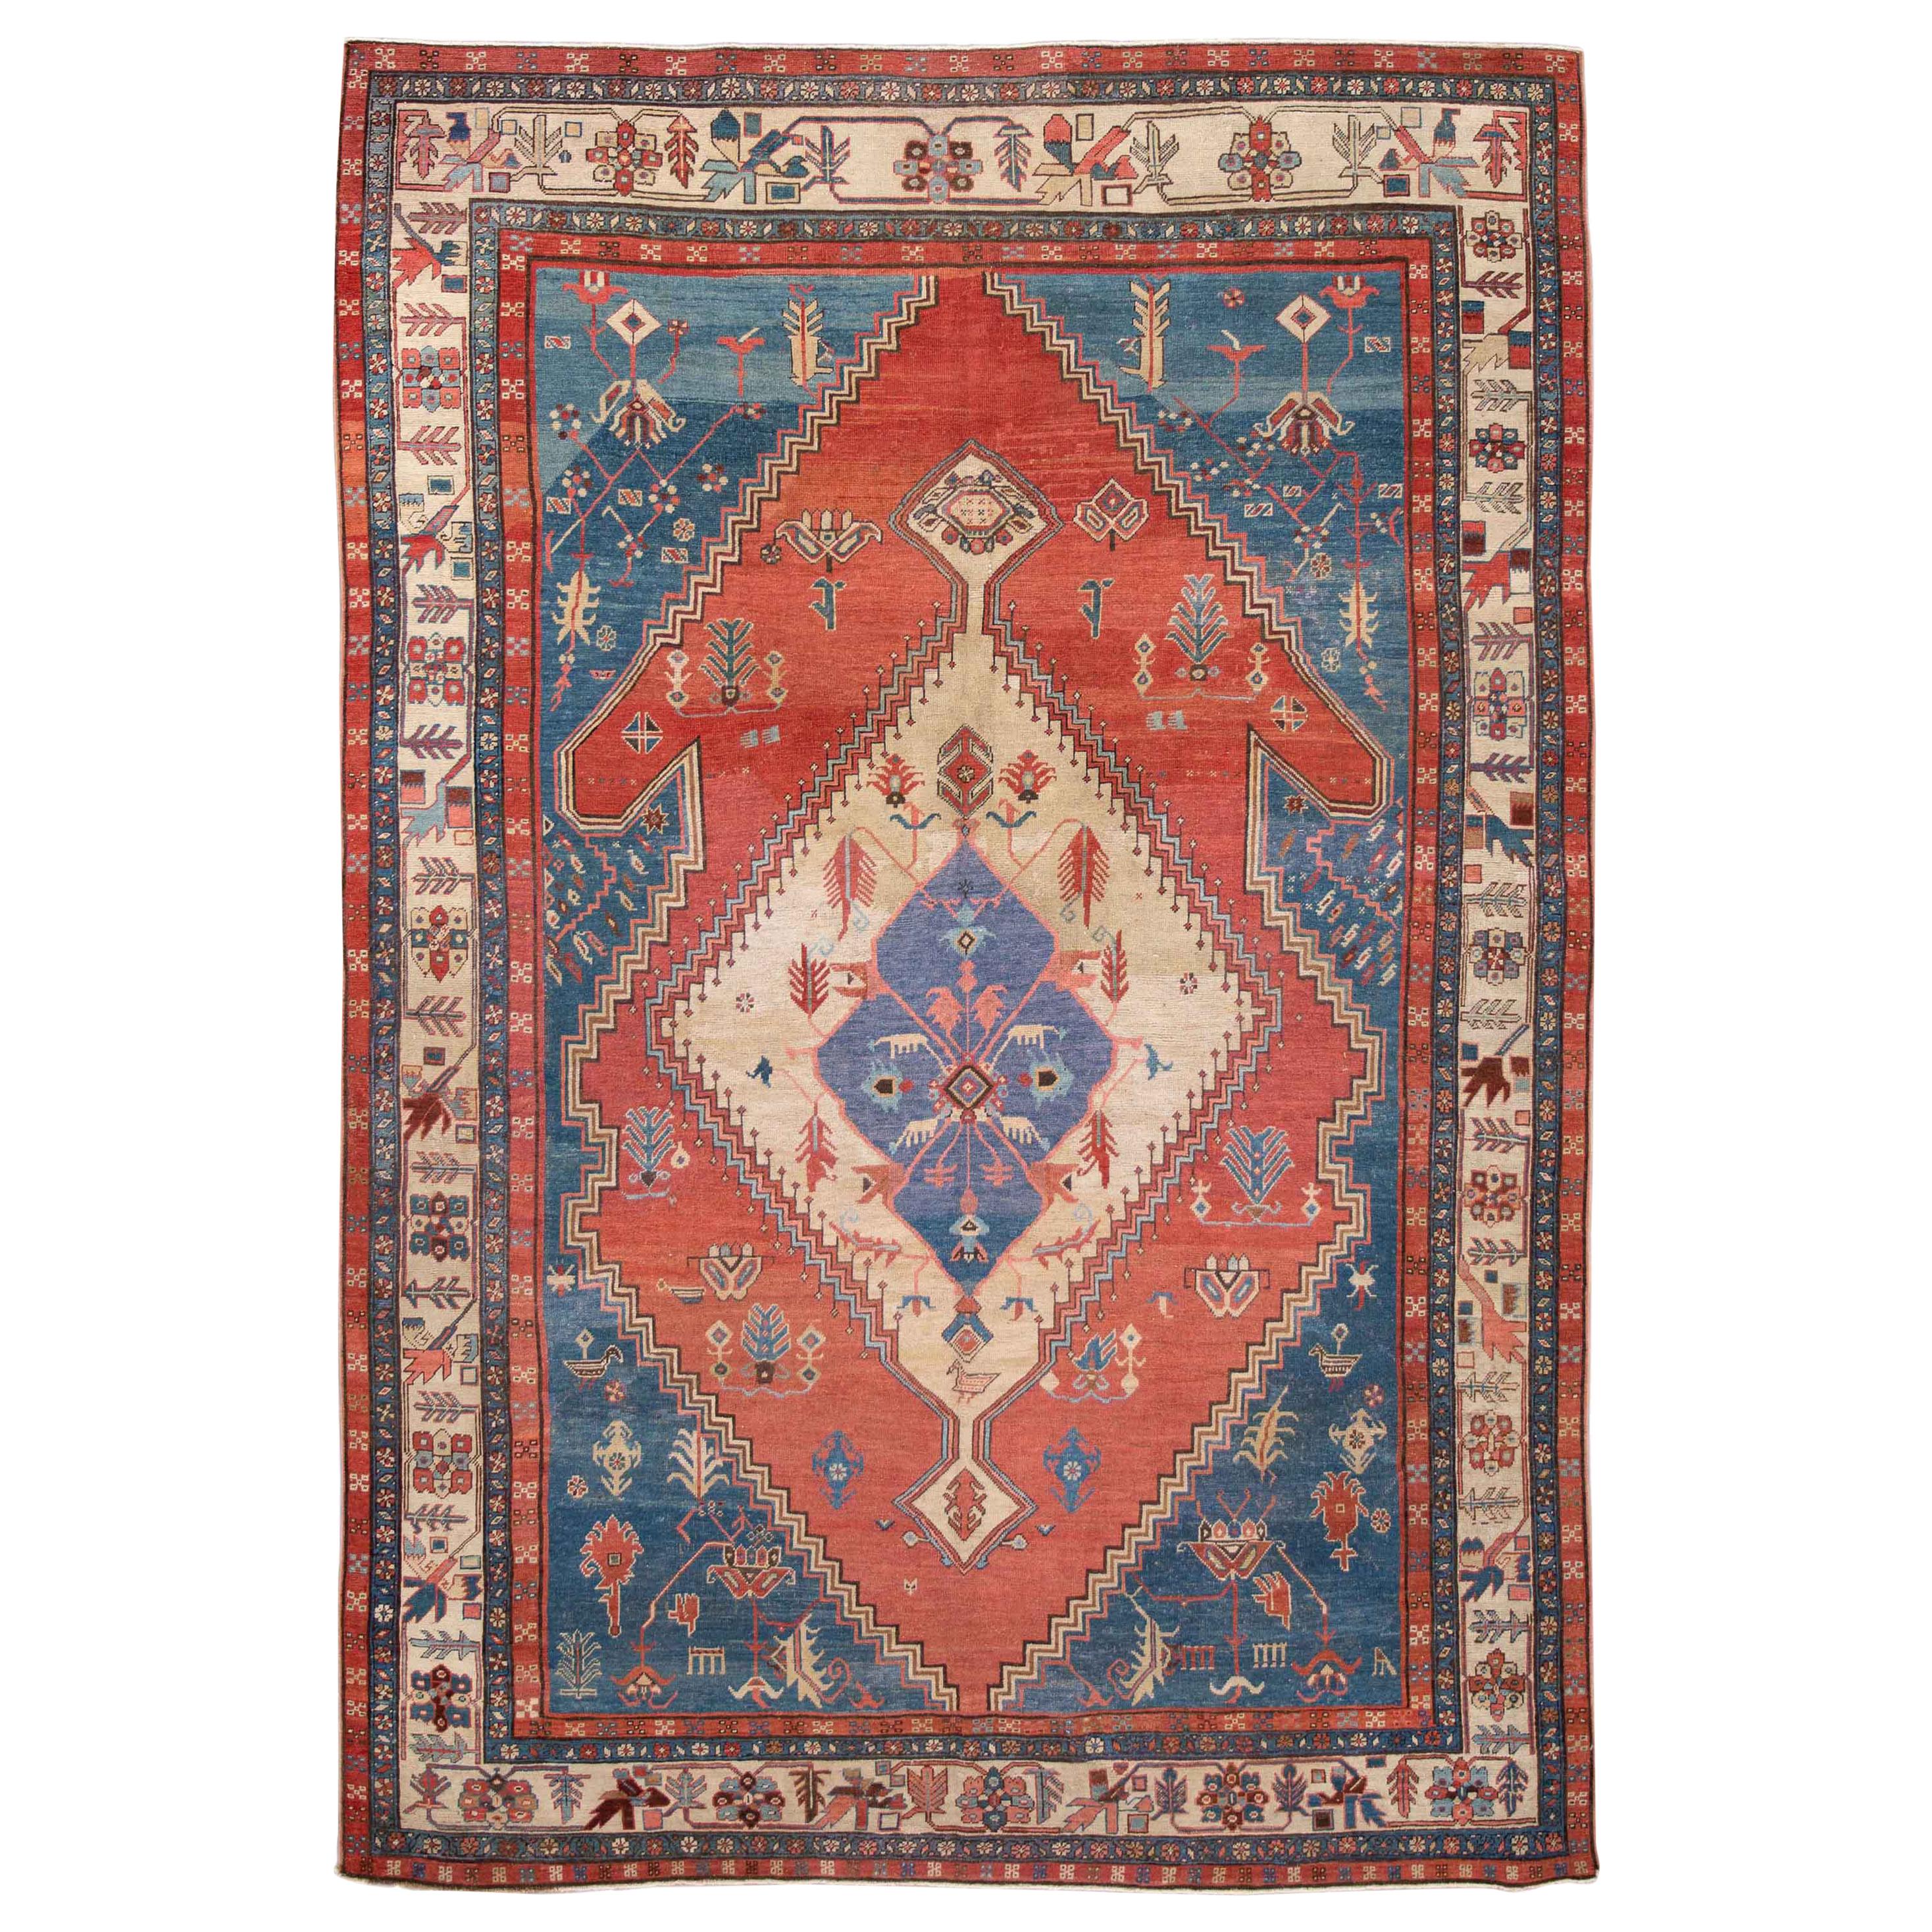 19th Century Antique Bakshaish Handmade Blue and Red Wool Rug